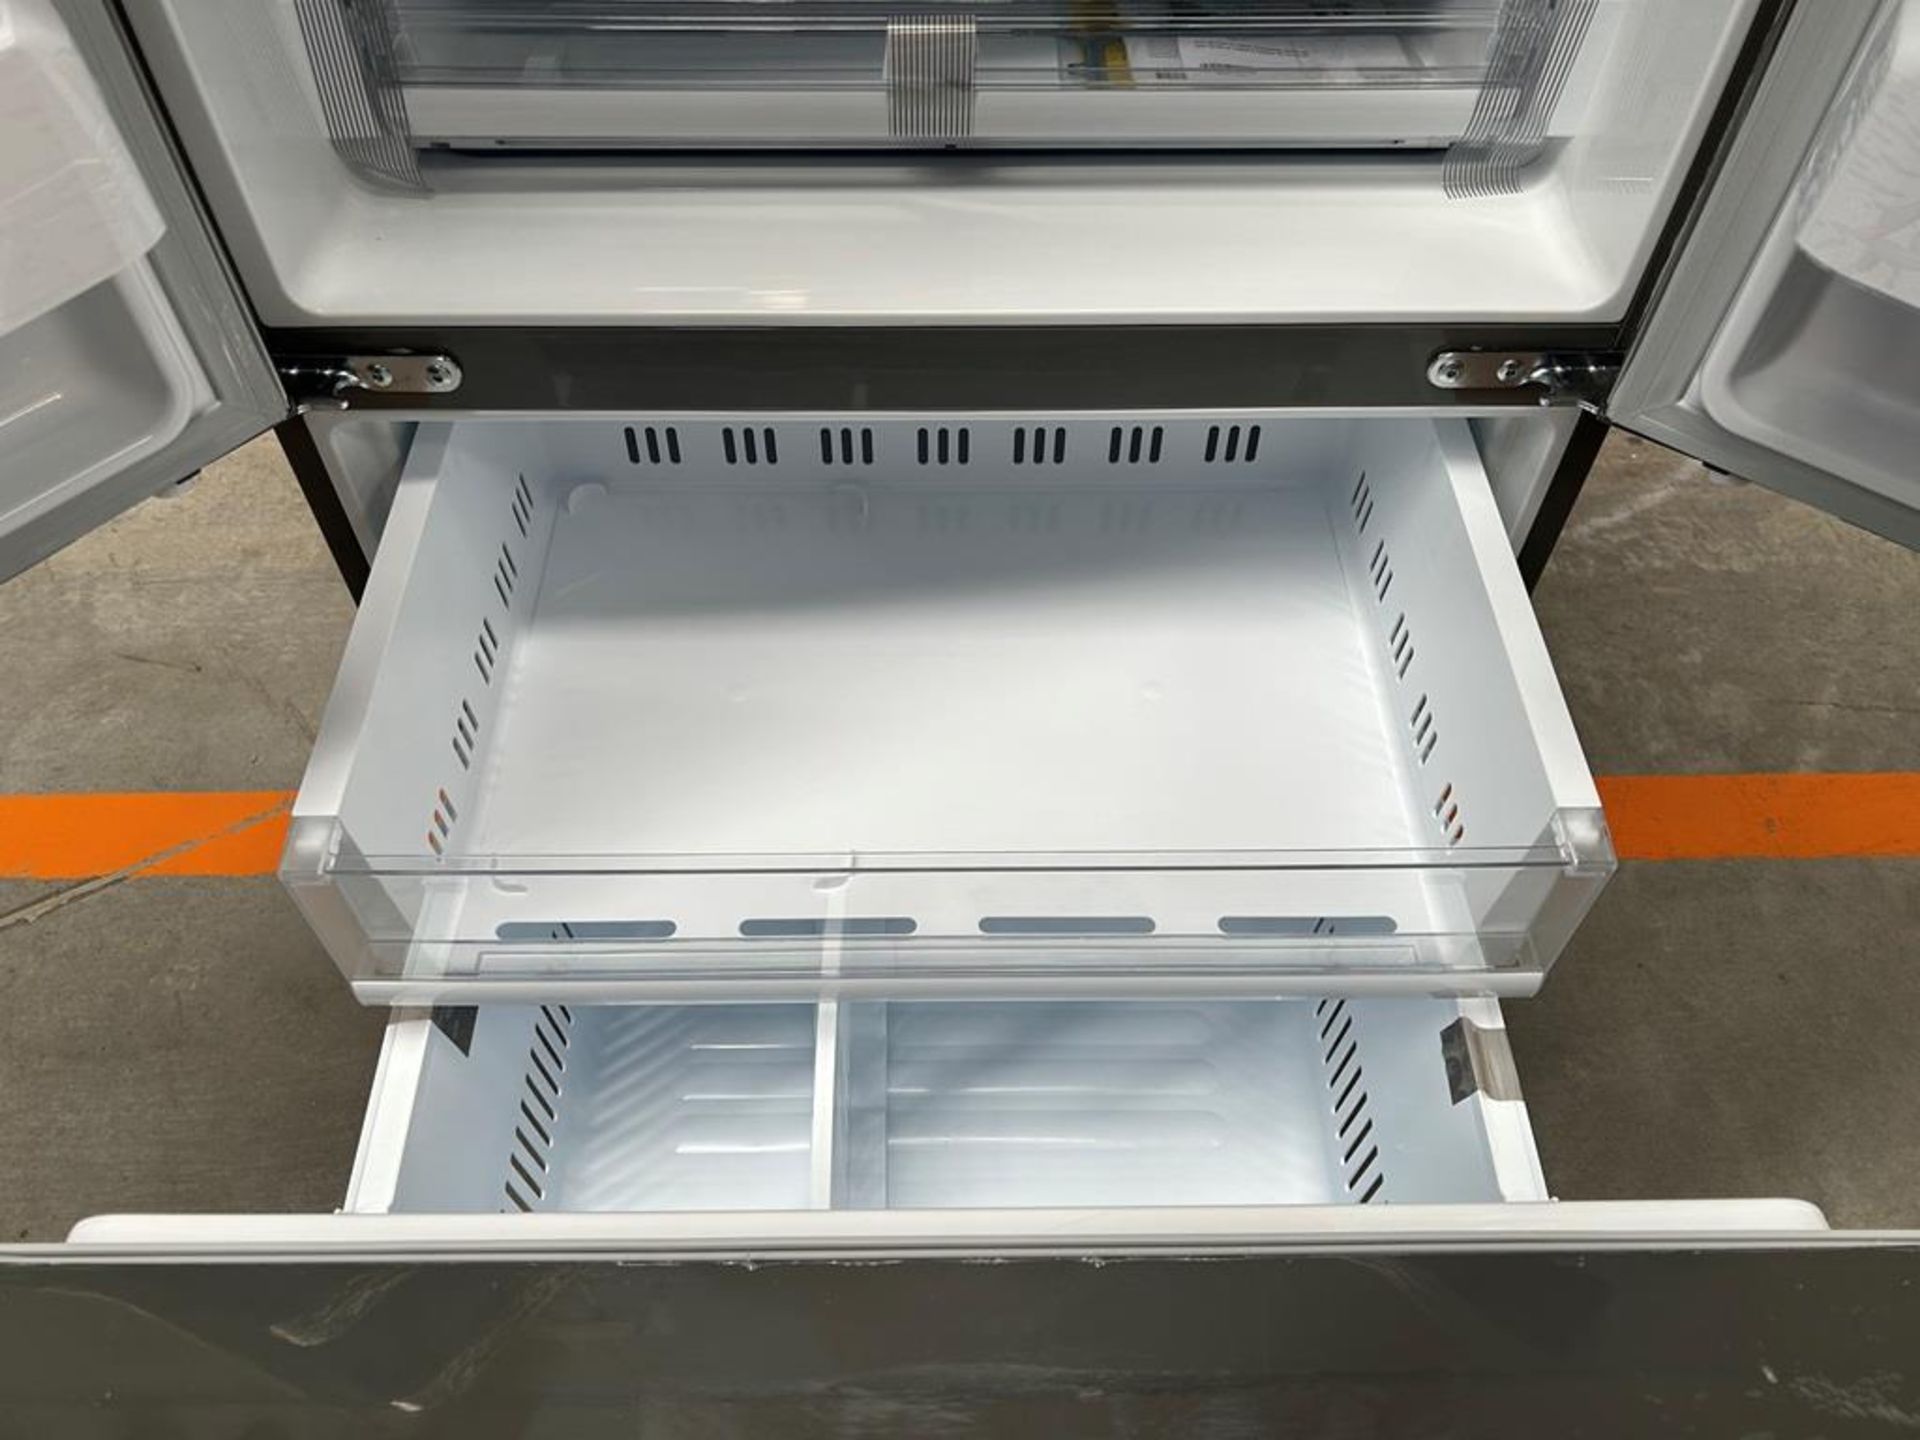 (NUEVO) Refrigerador Marca LG, Modelo GM65BGSK, Serie K30068, Color GRIS - Image 8 of 11